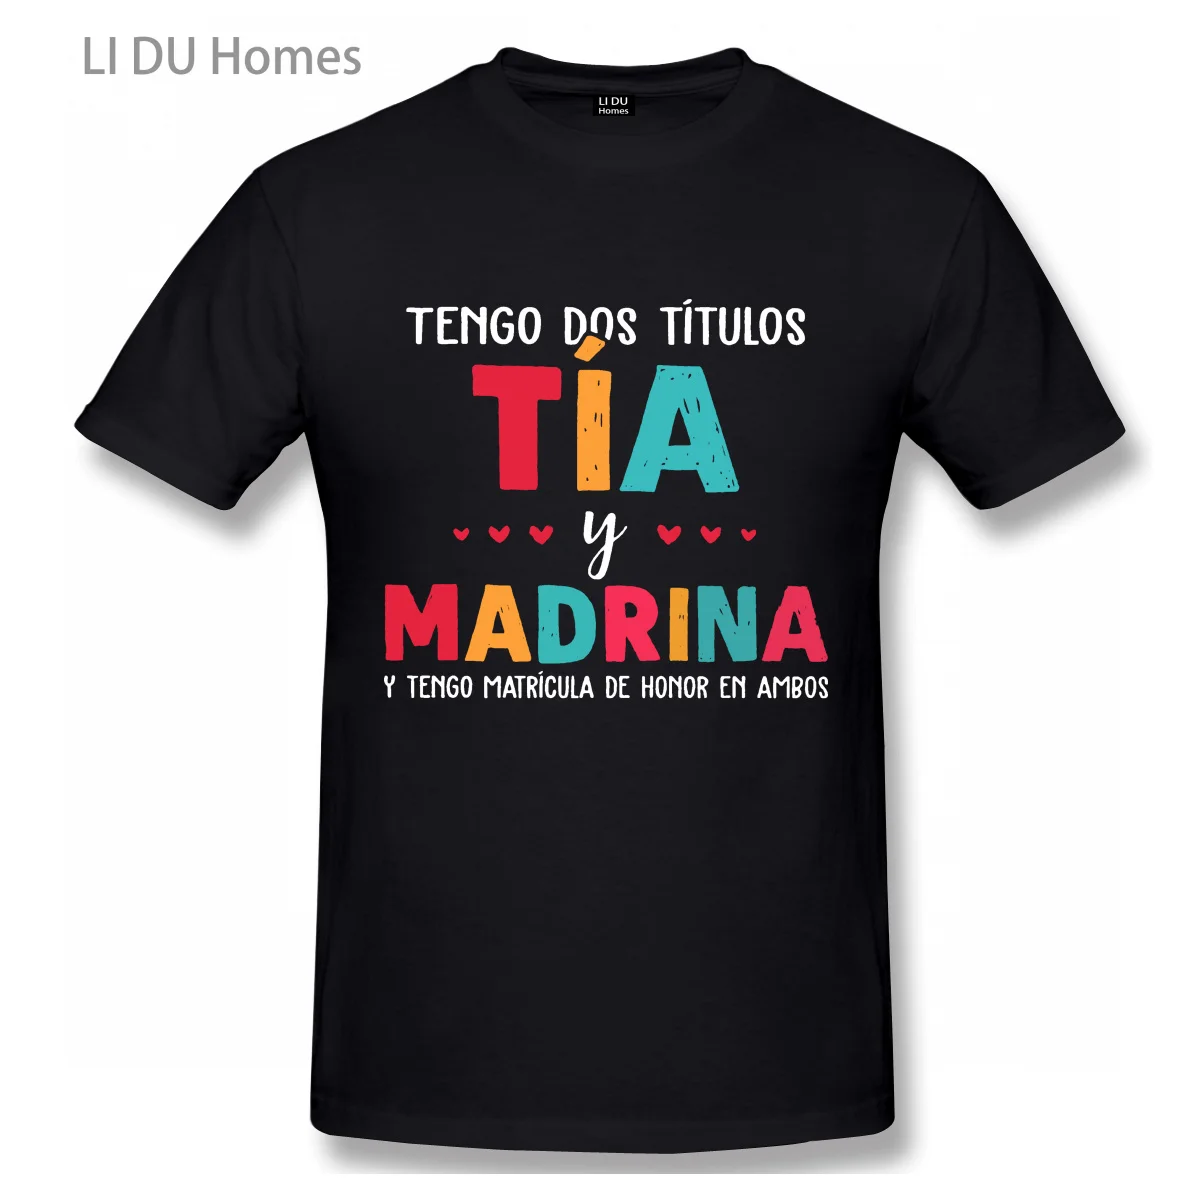 

Tengo Dos Titulos Tia Y Madrina T Shirts Men/WoMen High Quality Cotton Summer T-shirts Short Sleeve Graphics Tshirt Tee Top Gift